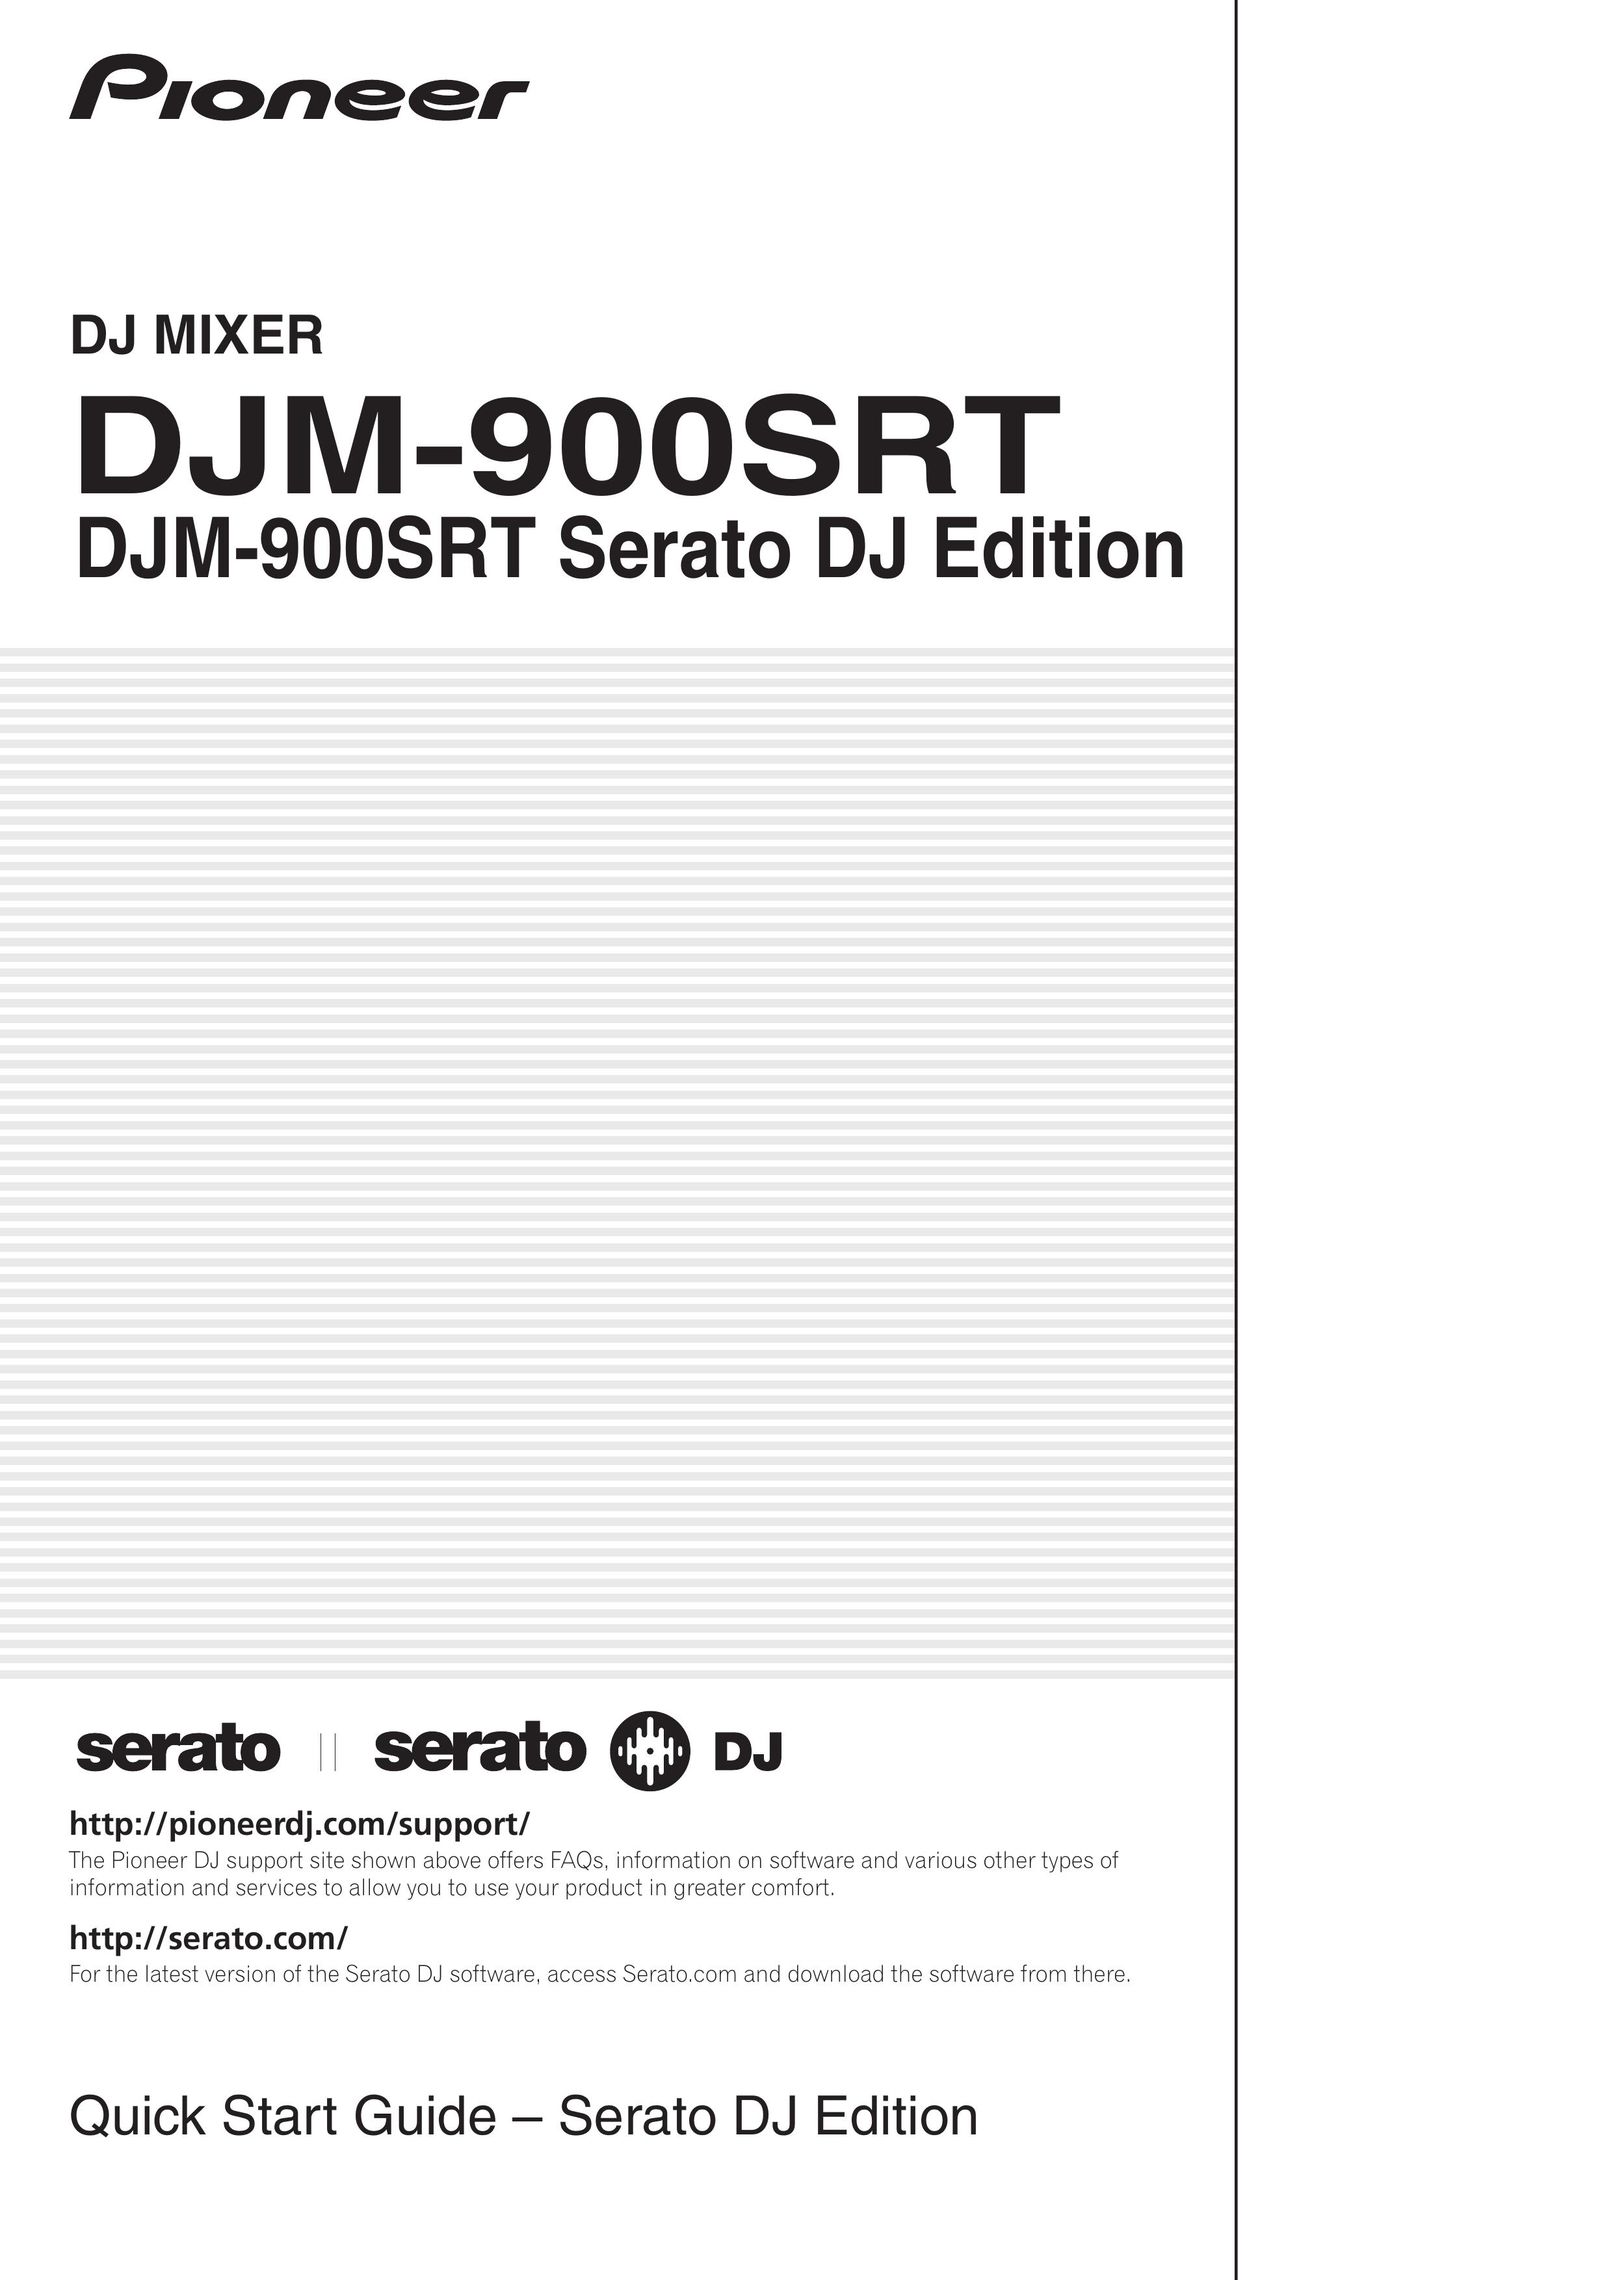 Pioneer DJM-900SRT Mixer User Manual